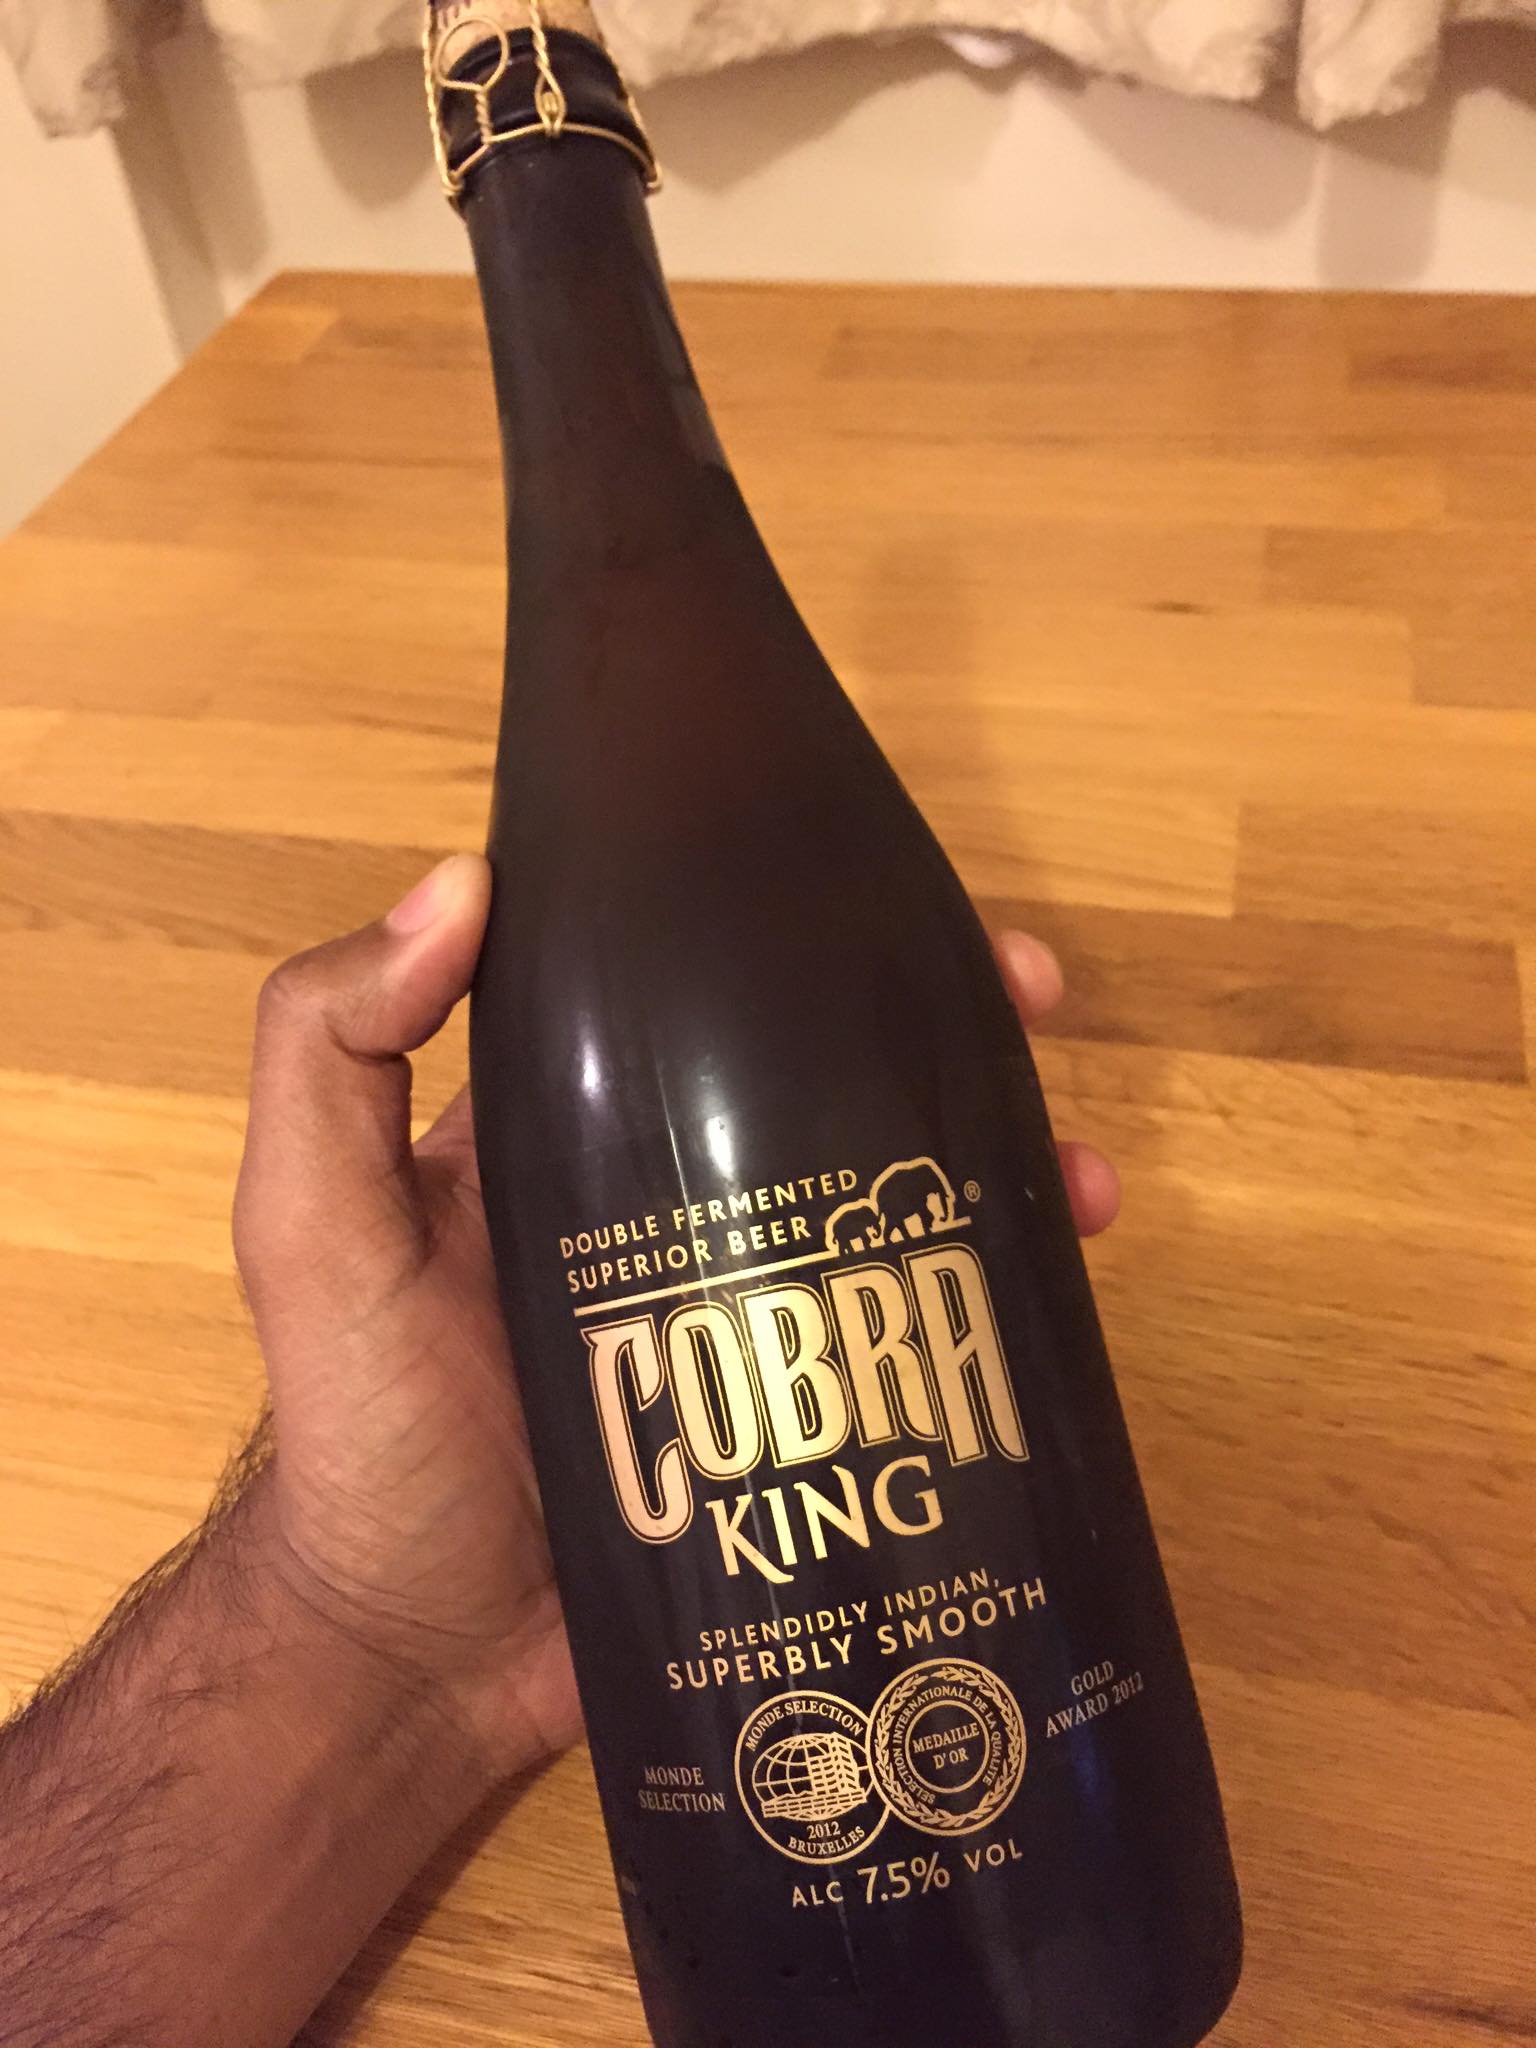 Cobra King
